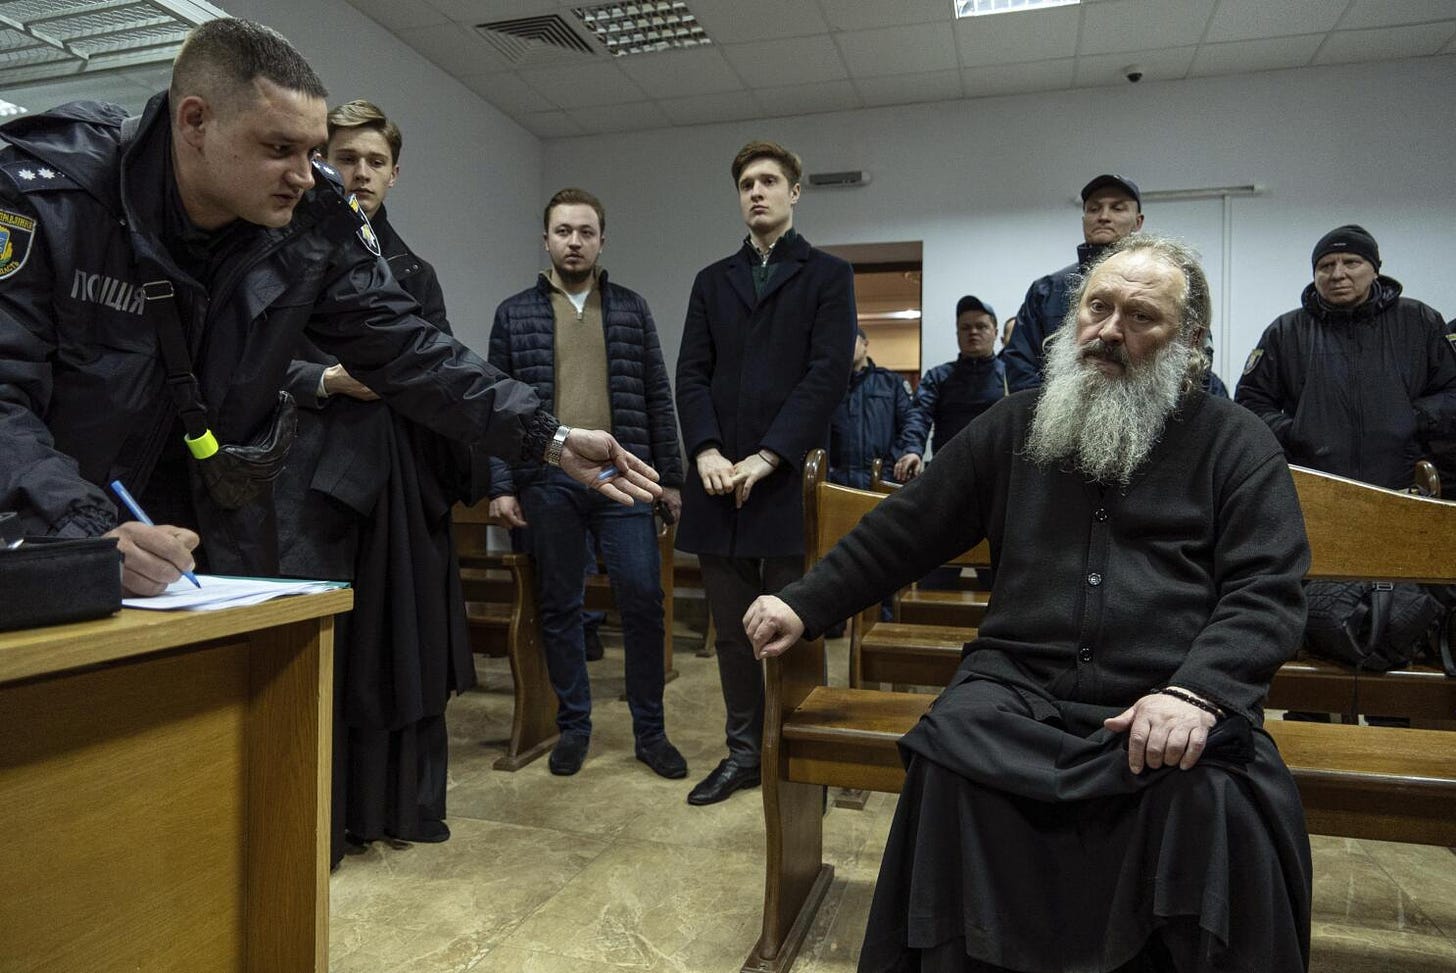 Ukrainian court puts an Orthodox leader under house arrest | AP News